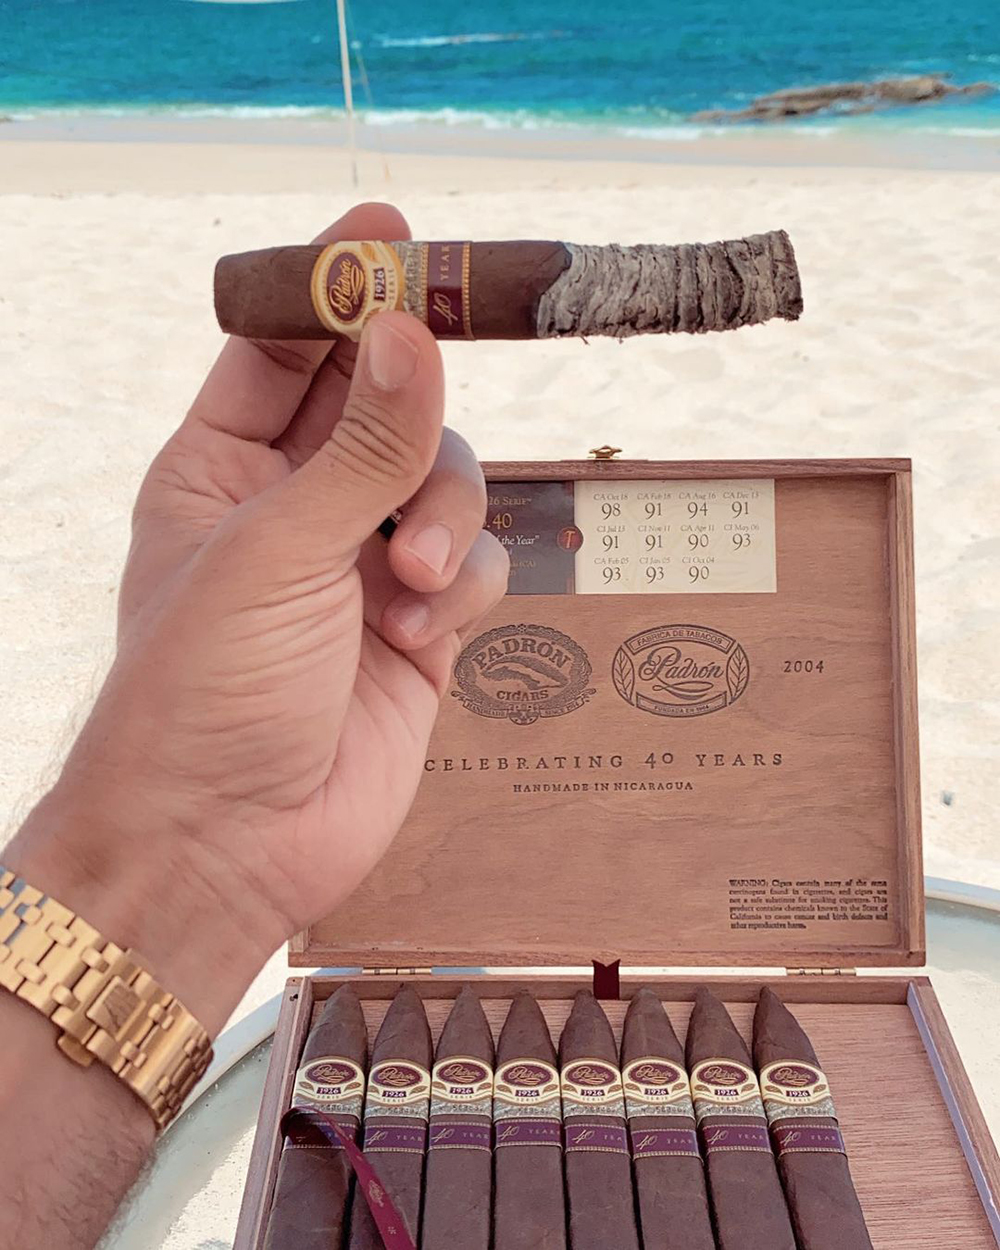 Manny Khoshbin's favorite cigar the Padron 40 years anniversary